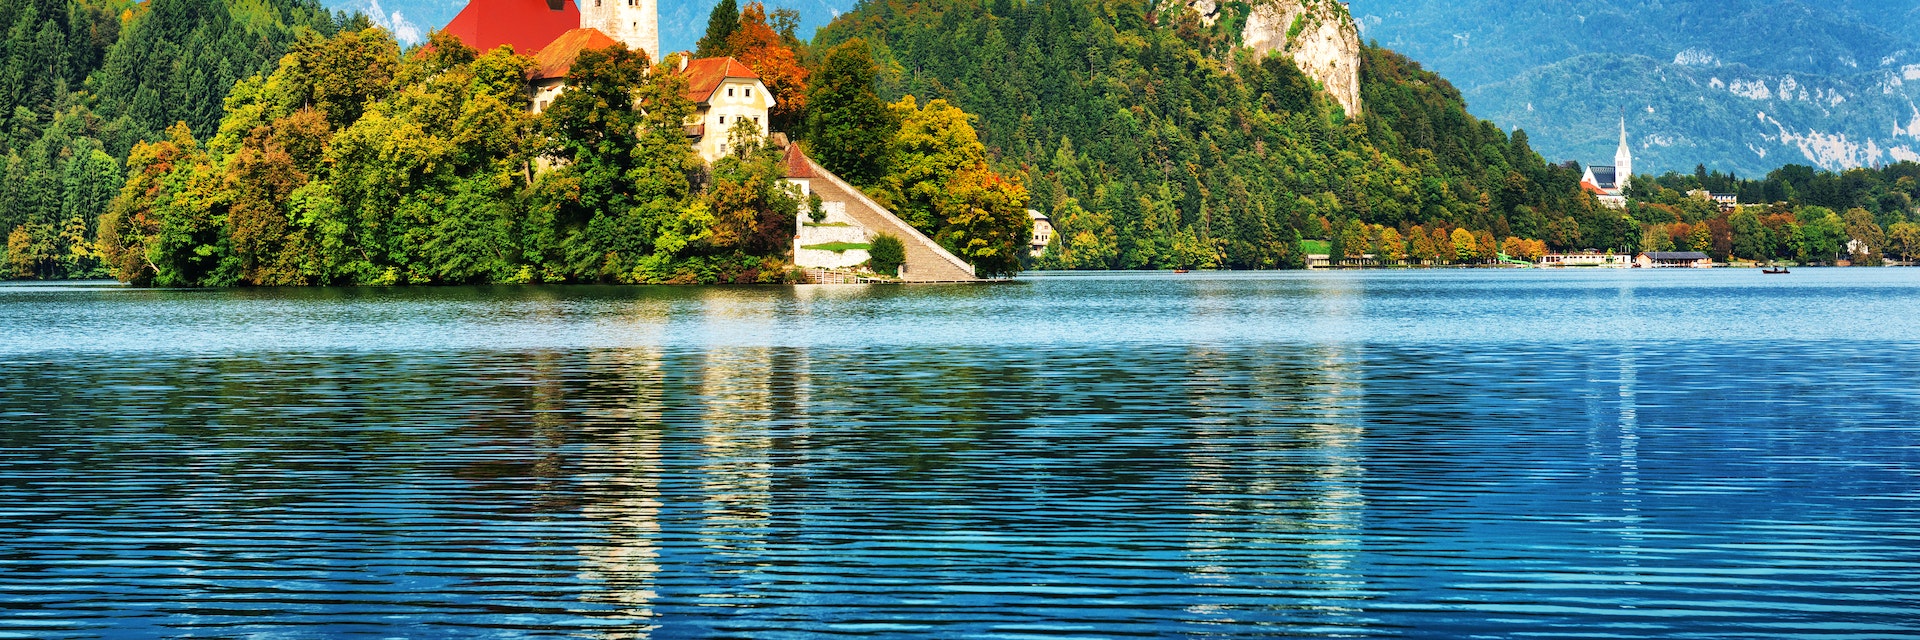 Church on an island in Lake Bled, Slovenia